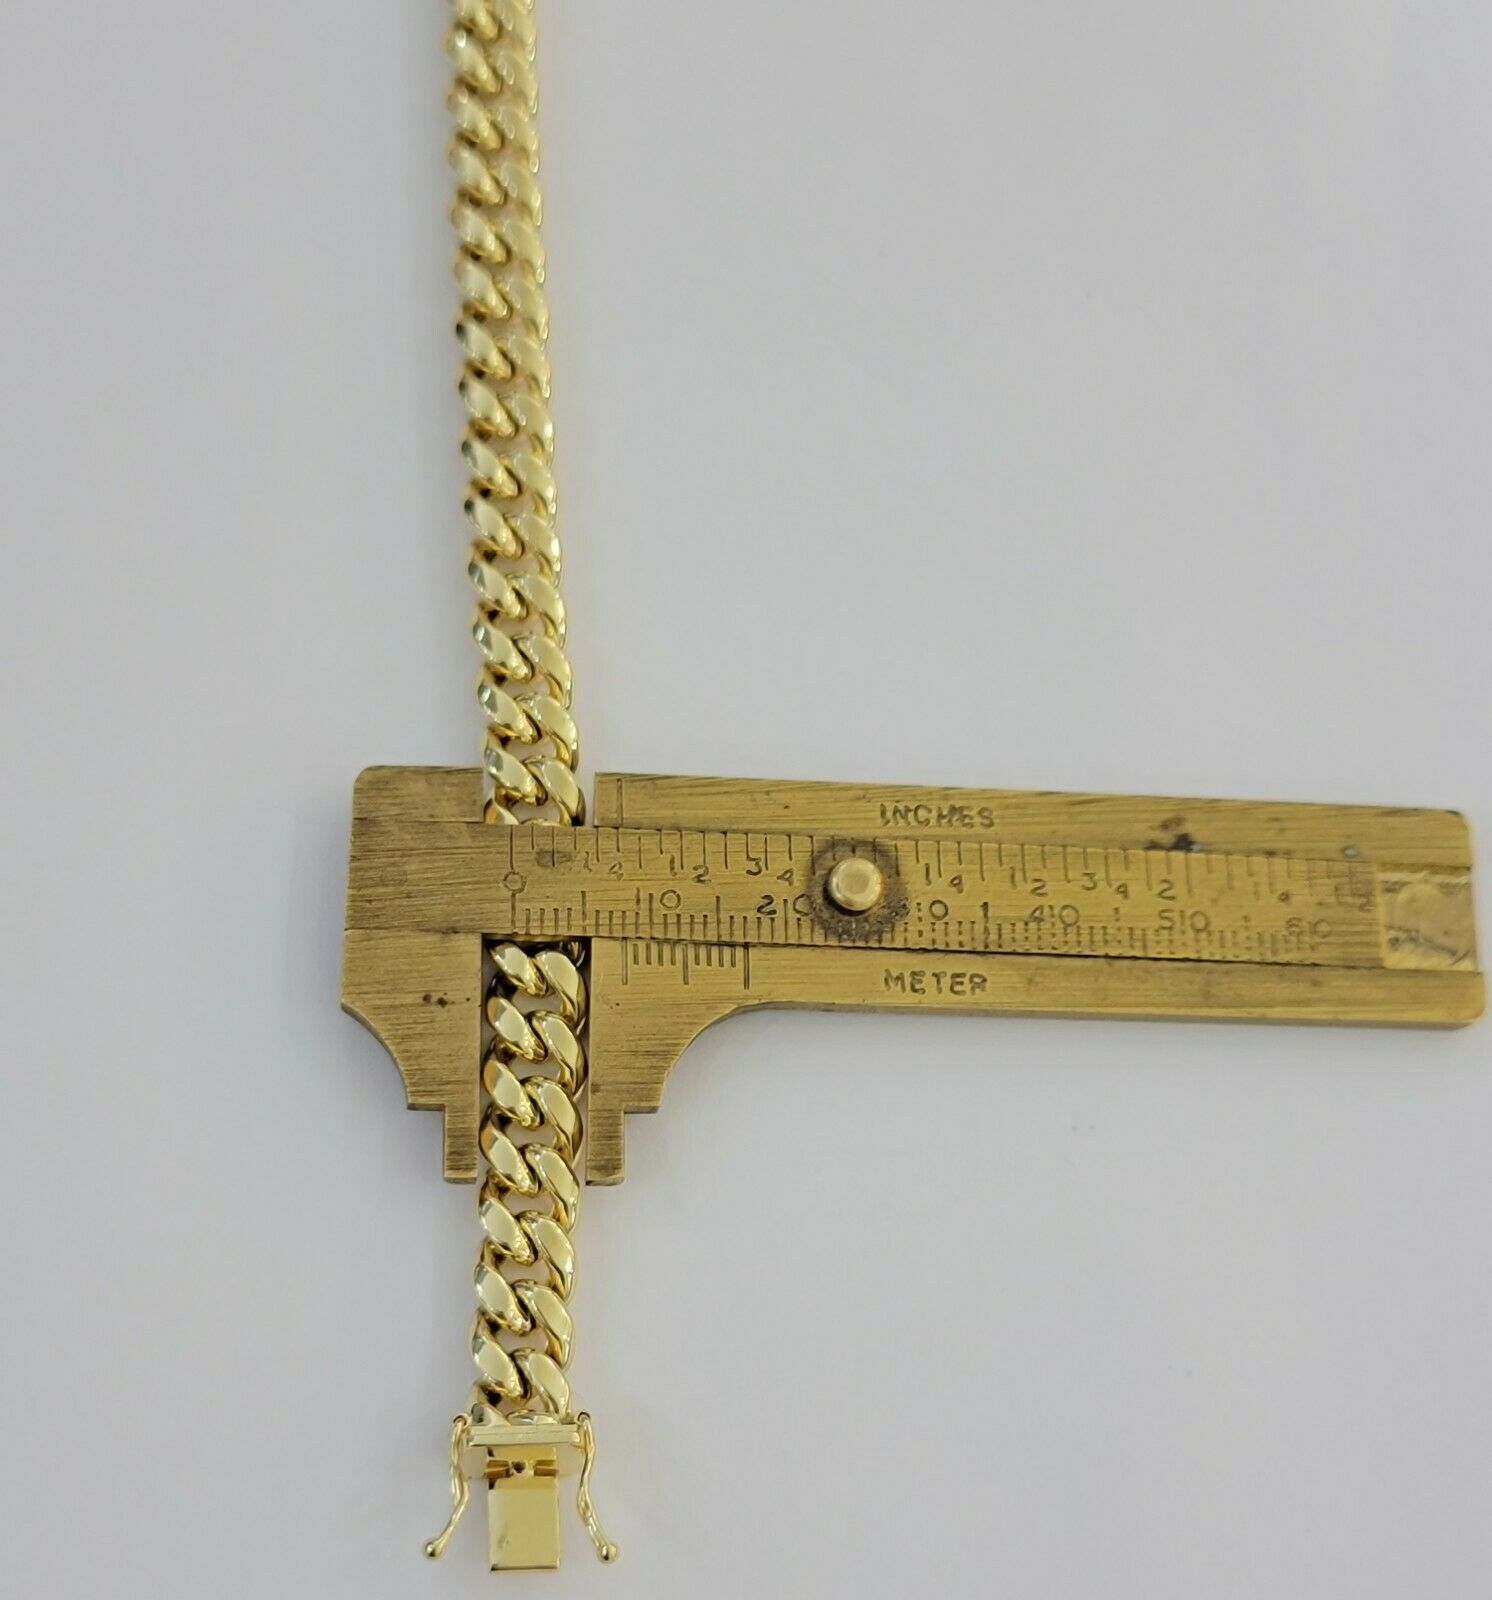 REAL 10k yellow Gold bracelet Miami Cuban Link 6MM-9Mm 7-9